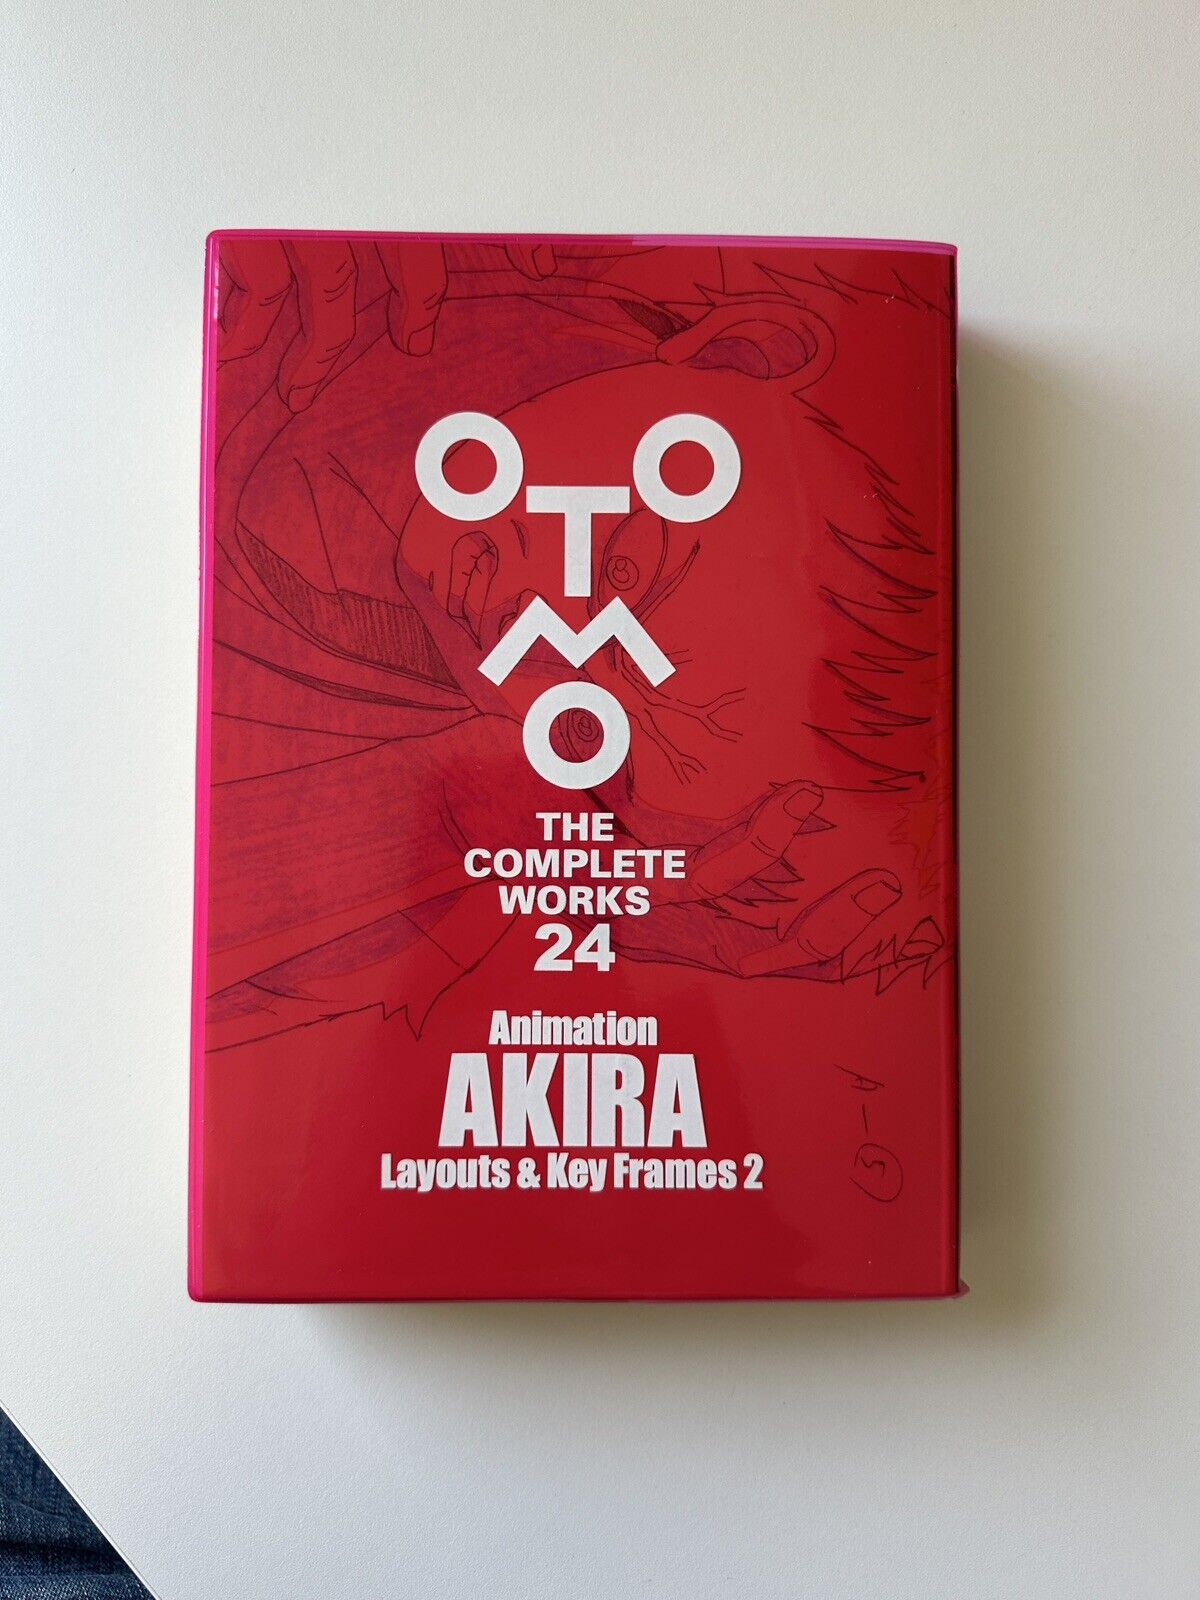 Otomo: The Complete Works 24 AKIRA